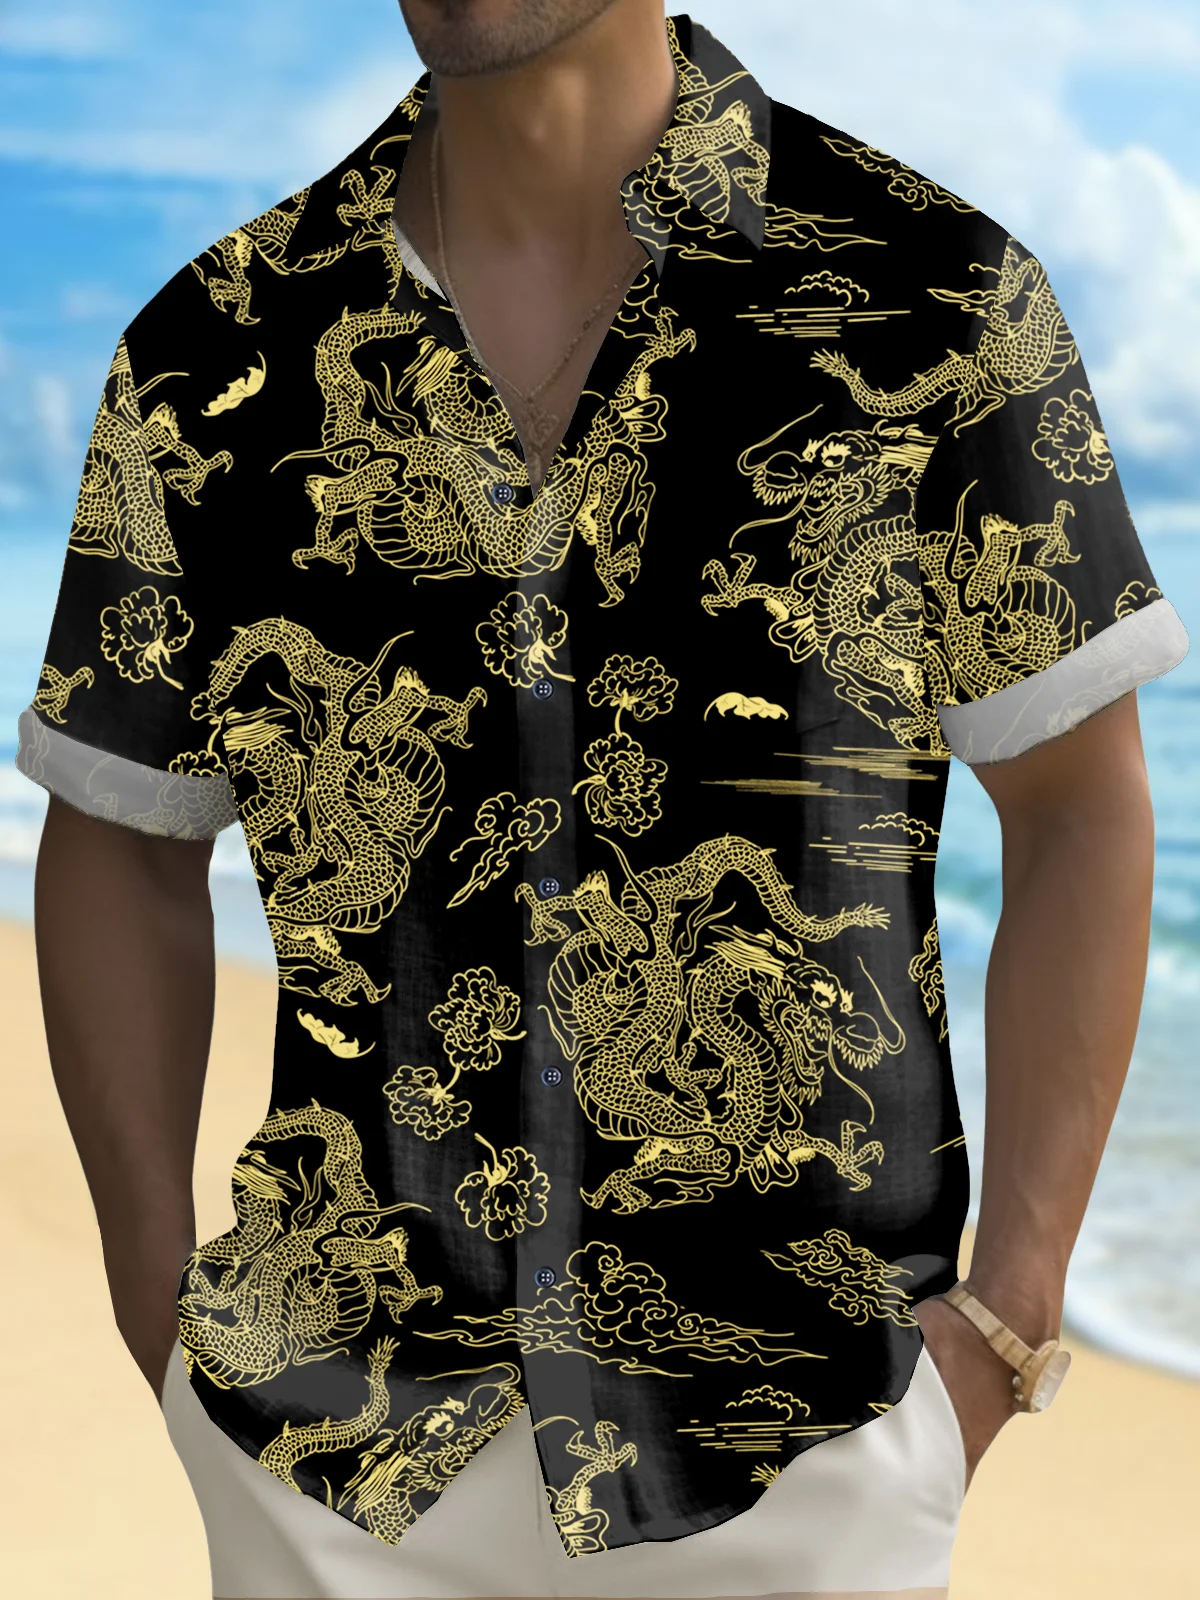 Royaura® Vintage Year of the Dragon Black Gold Dragon Print Men's Shirt Stretch Pocket Camping Shirt Big Tall